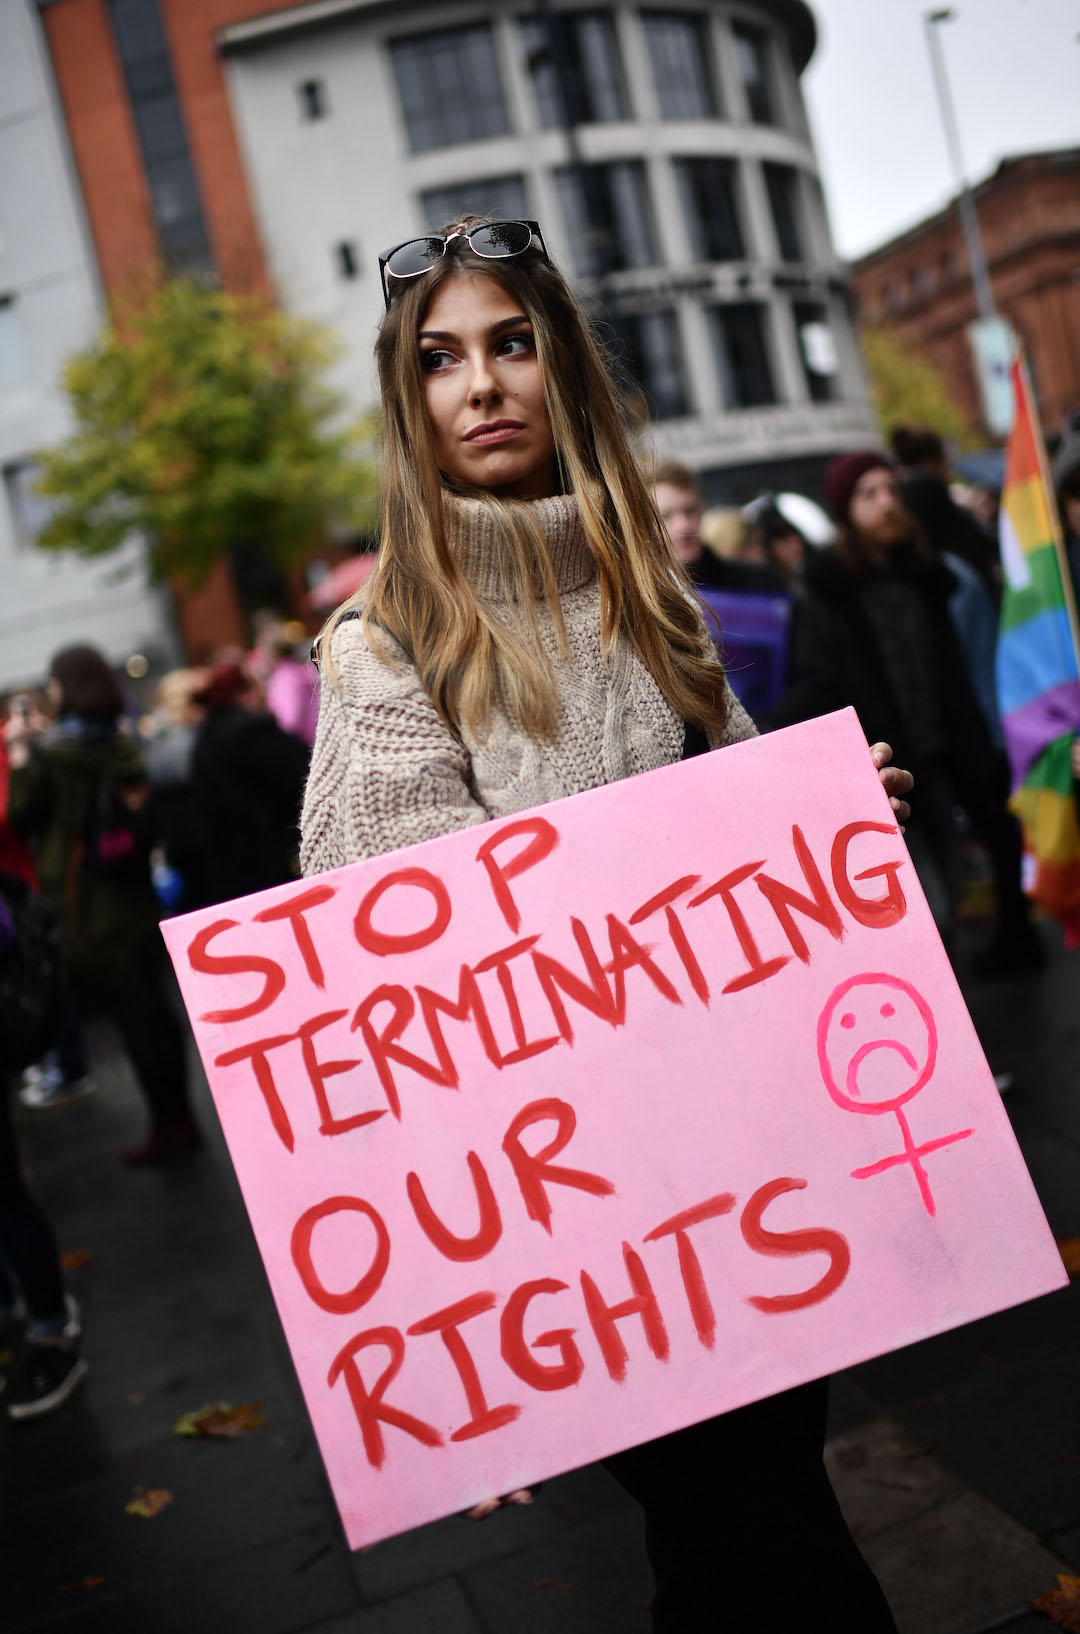 Irish protest on Abortion rights